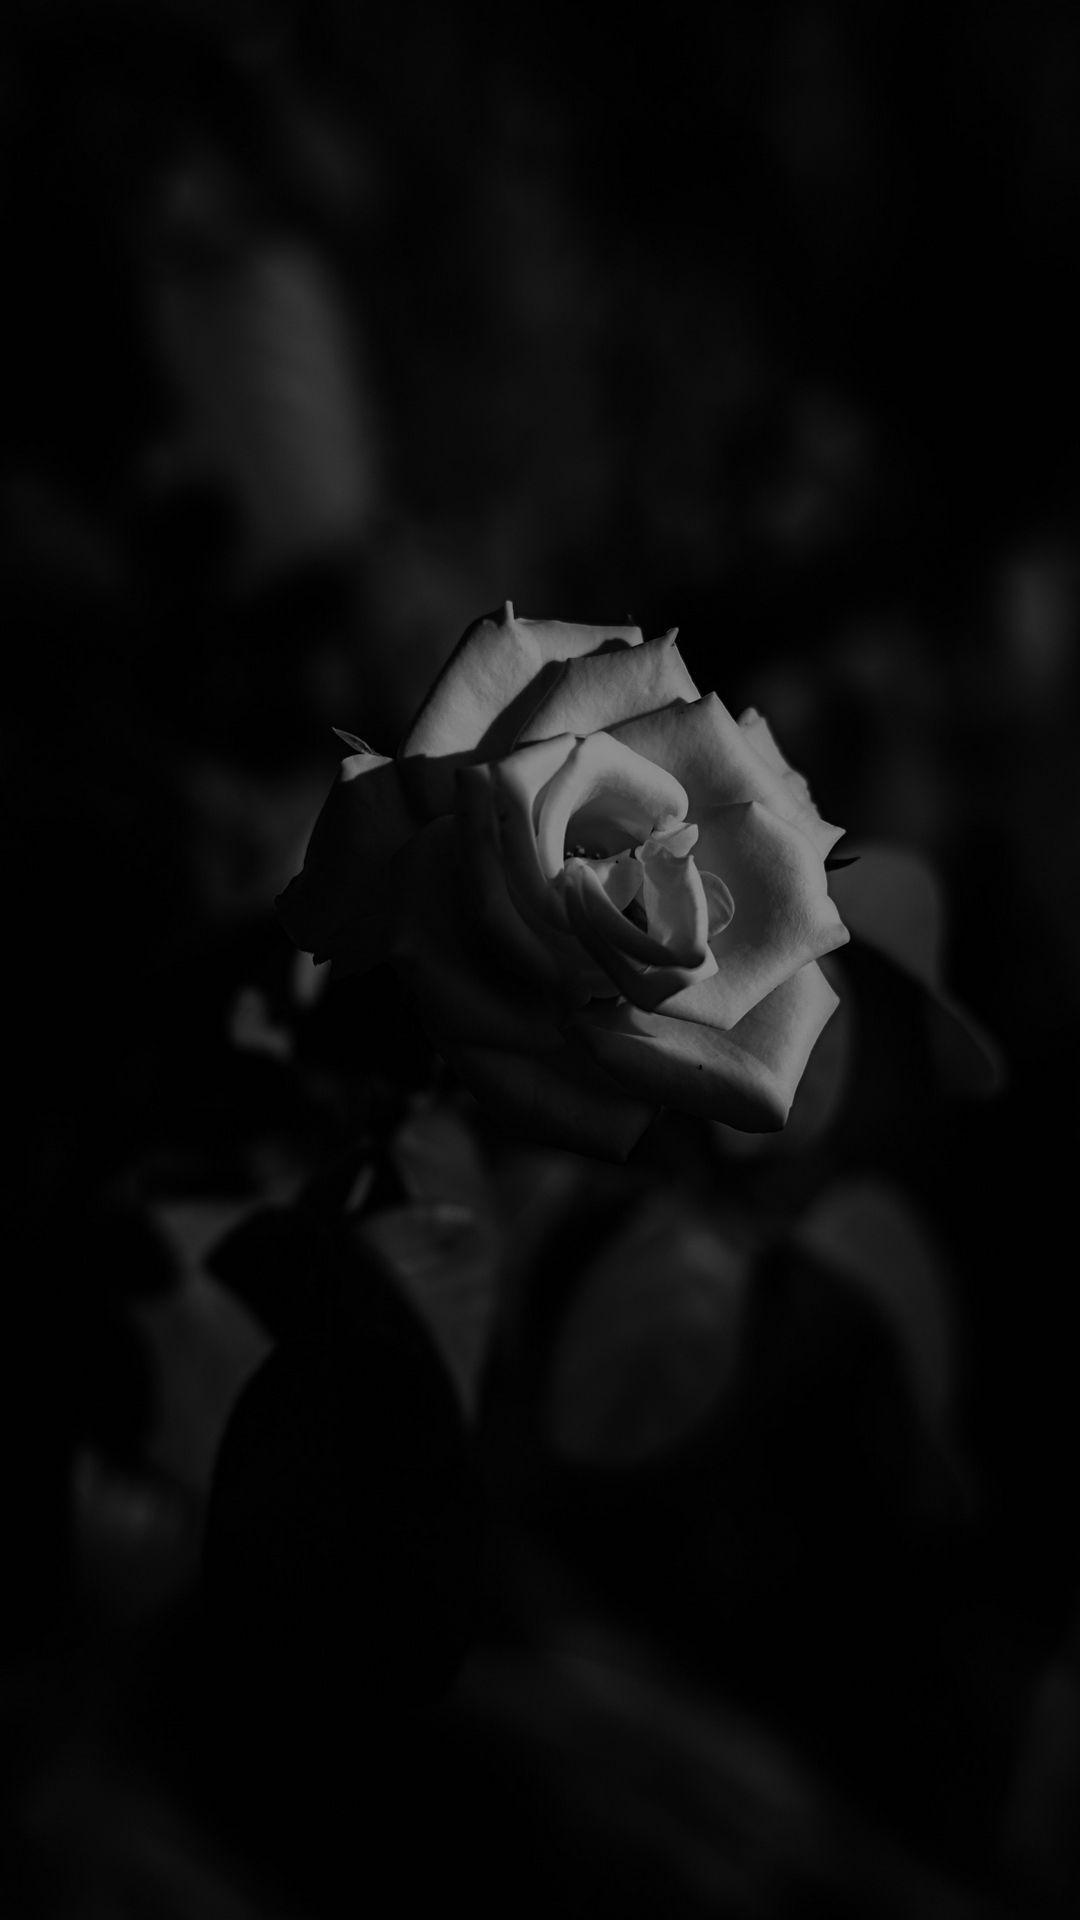 Hình nền iPhone 1080x1920 Black and White Flower